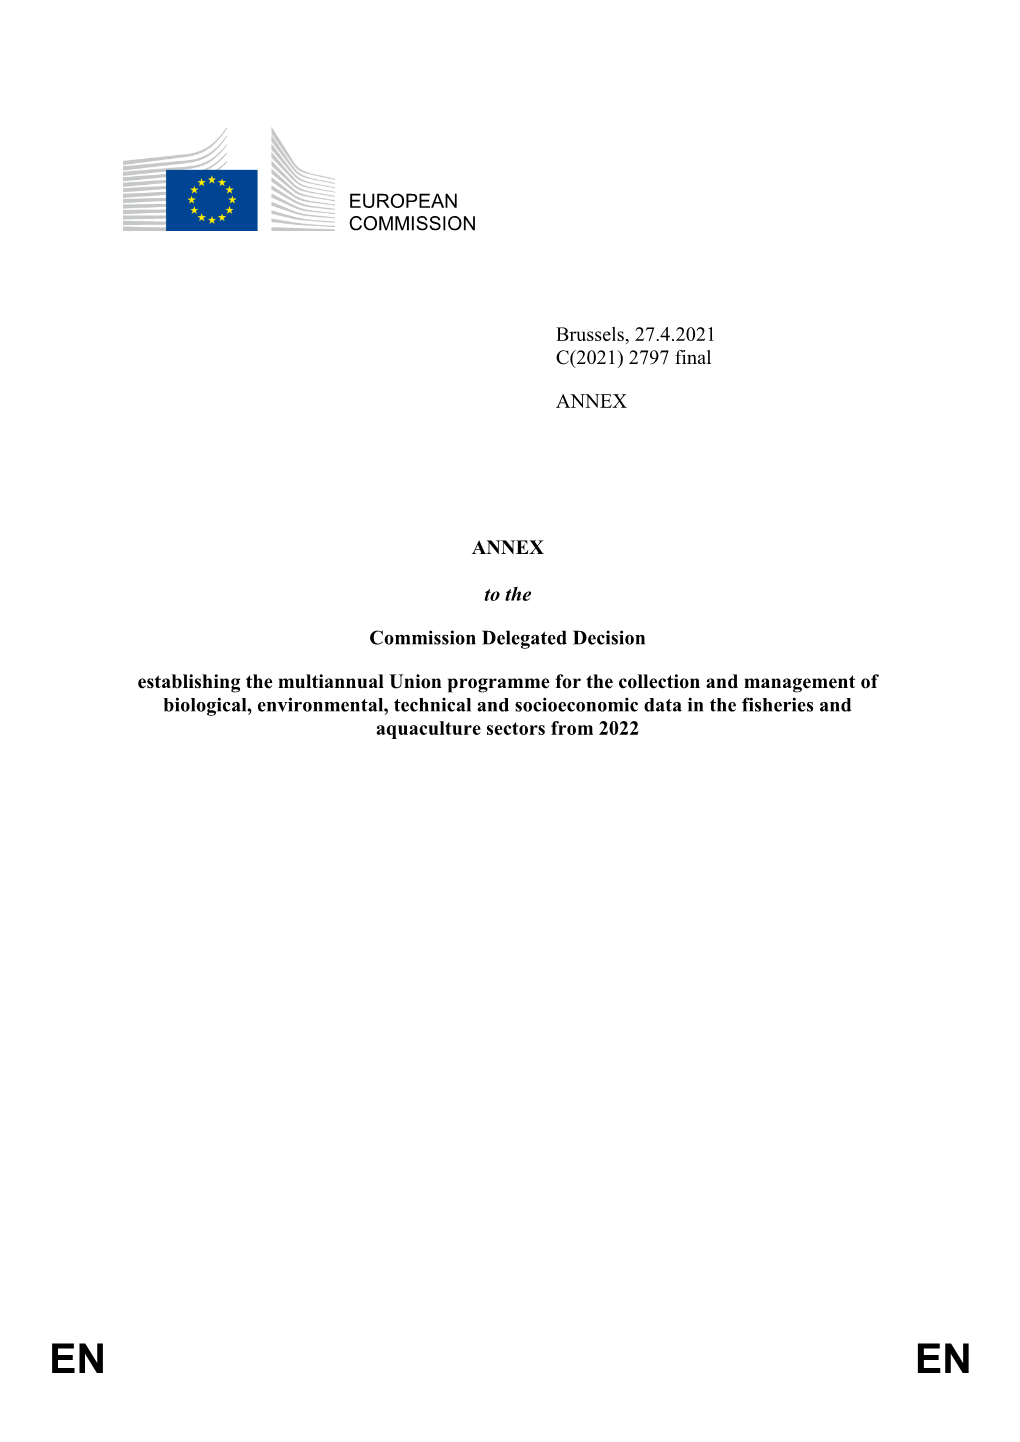 EUROPEAN COMMISSION Brussels, 27.4.2021 C(2021) 2797 Final